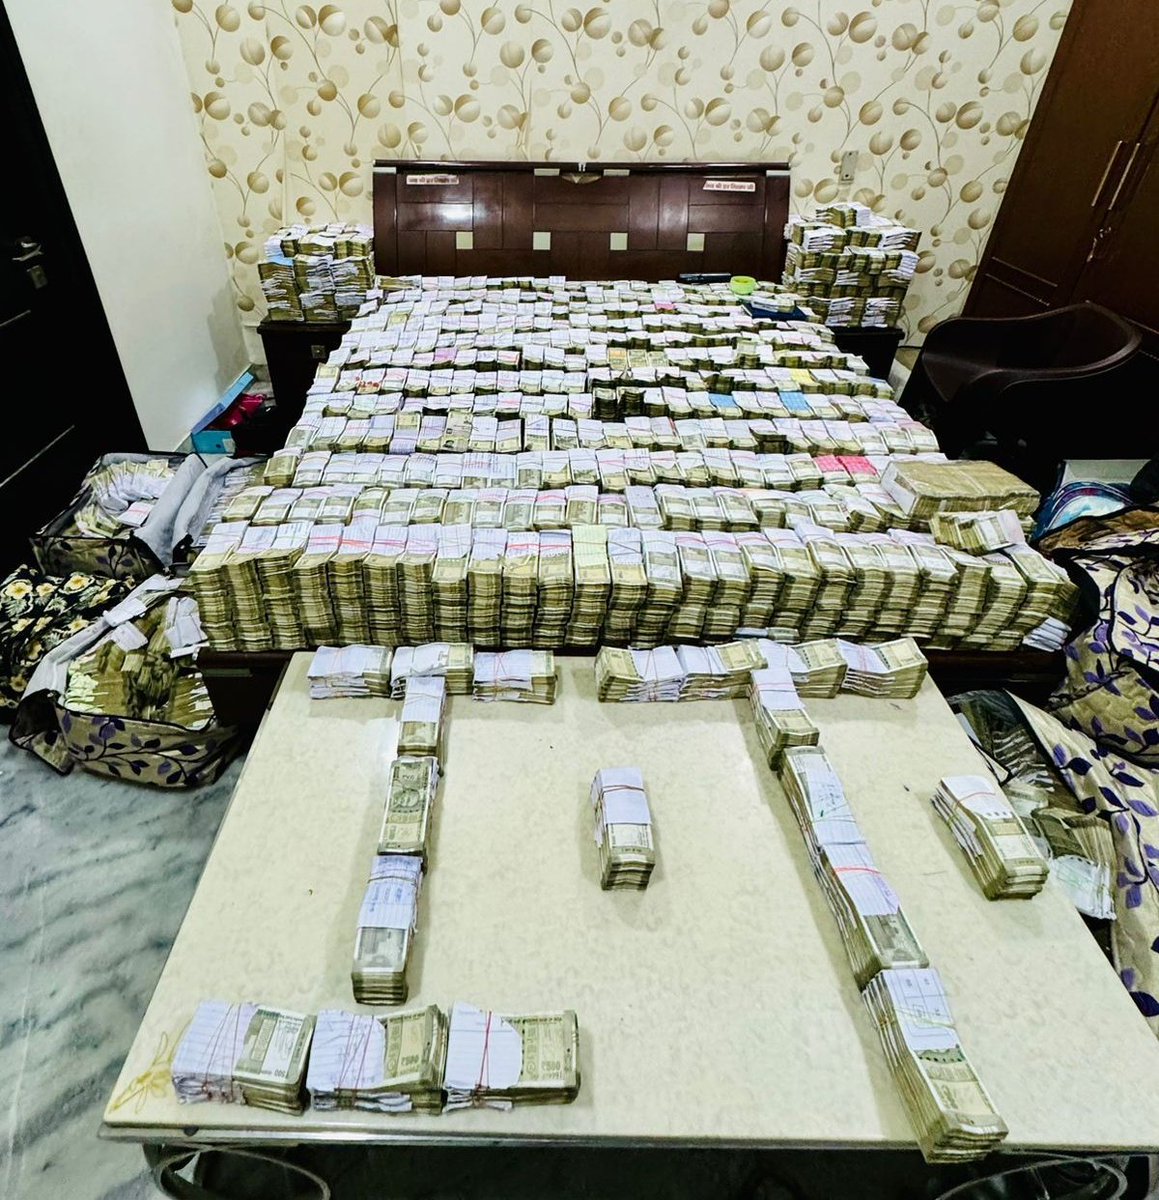 40 Crores in cash + 60 Crores in Gold recovered from Ramnath Dang's house in Agra. 

Who is he? A shoe trader. 

Aur tum yahan 'Venture Capitalists' ke peeche 100k ke liye katora le kar ghoom rahe ho.